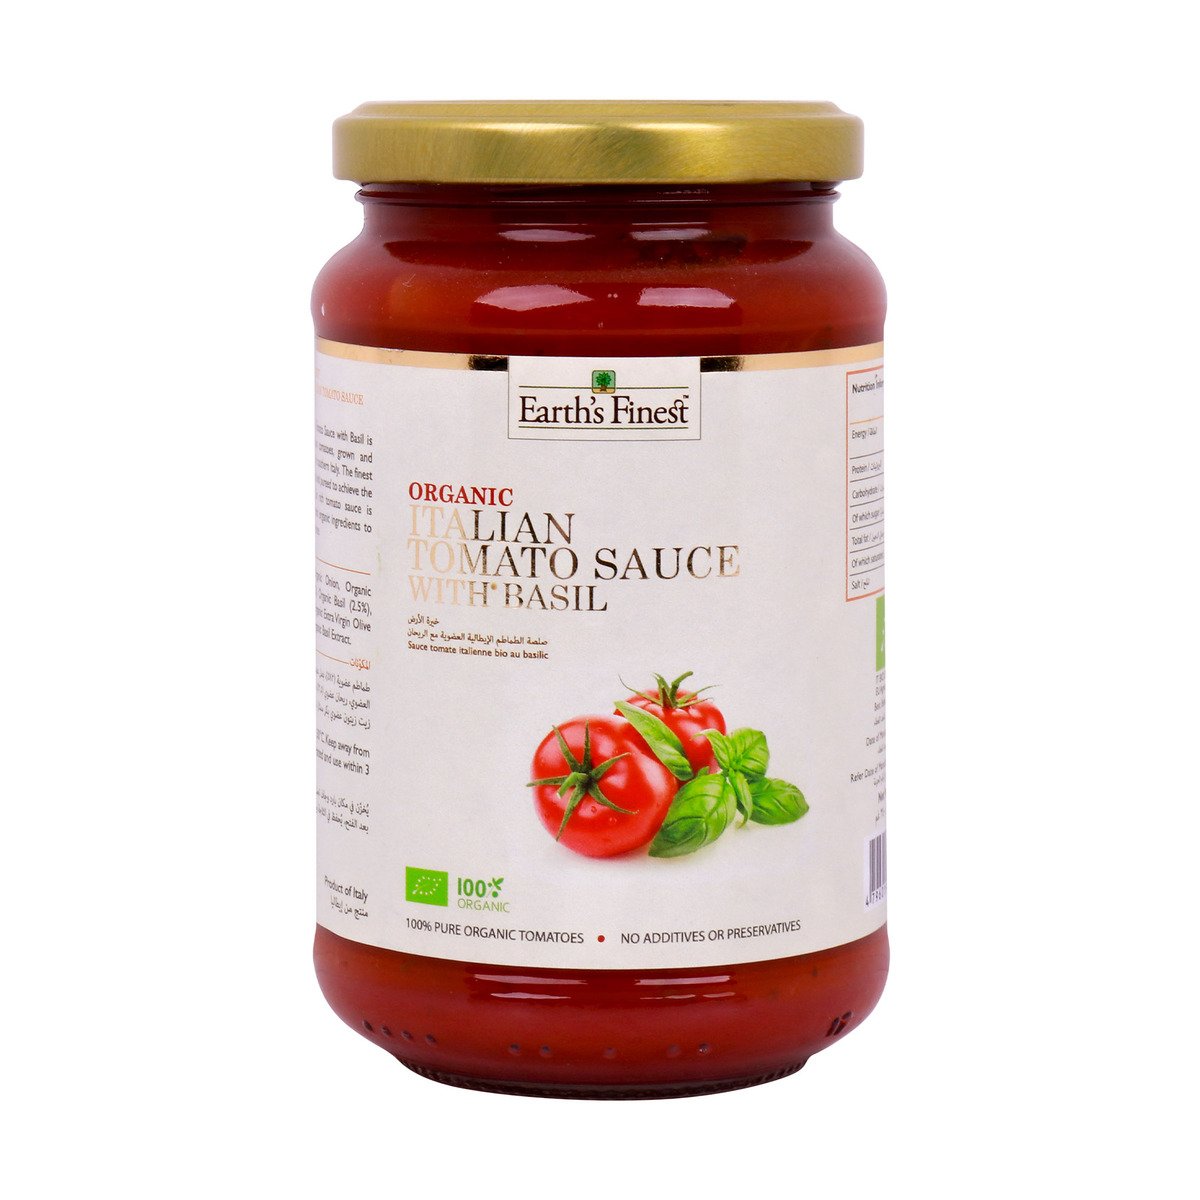 Earth's Finest Organic Italian Classic Tomato Sauce with Basil 340g